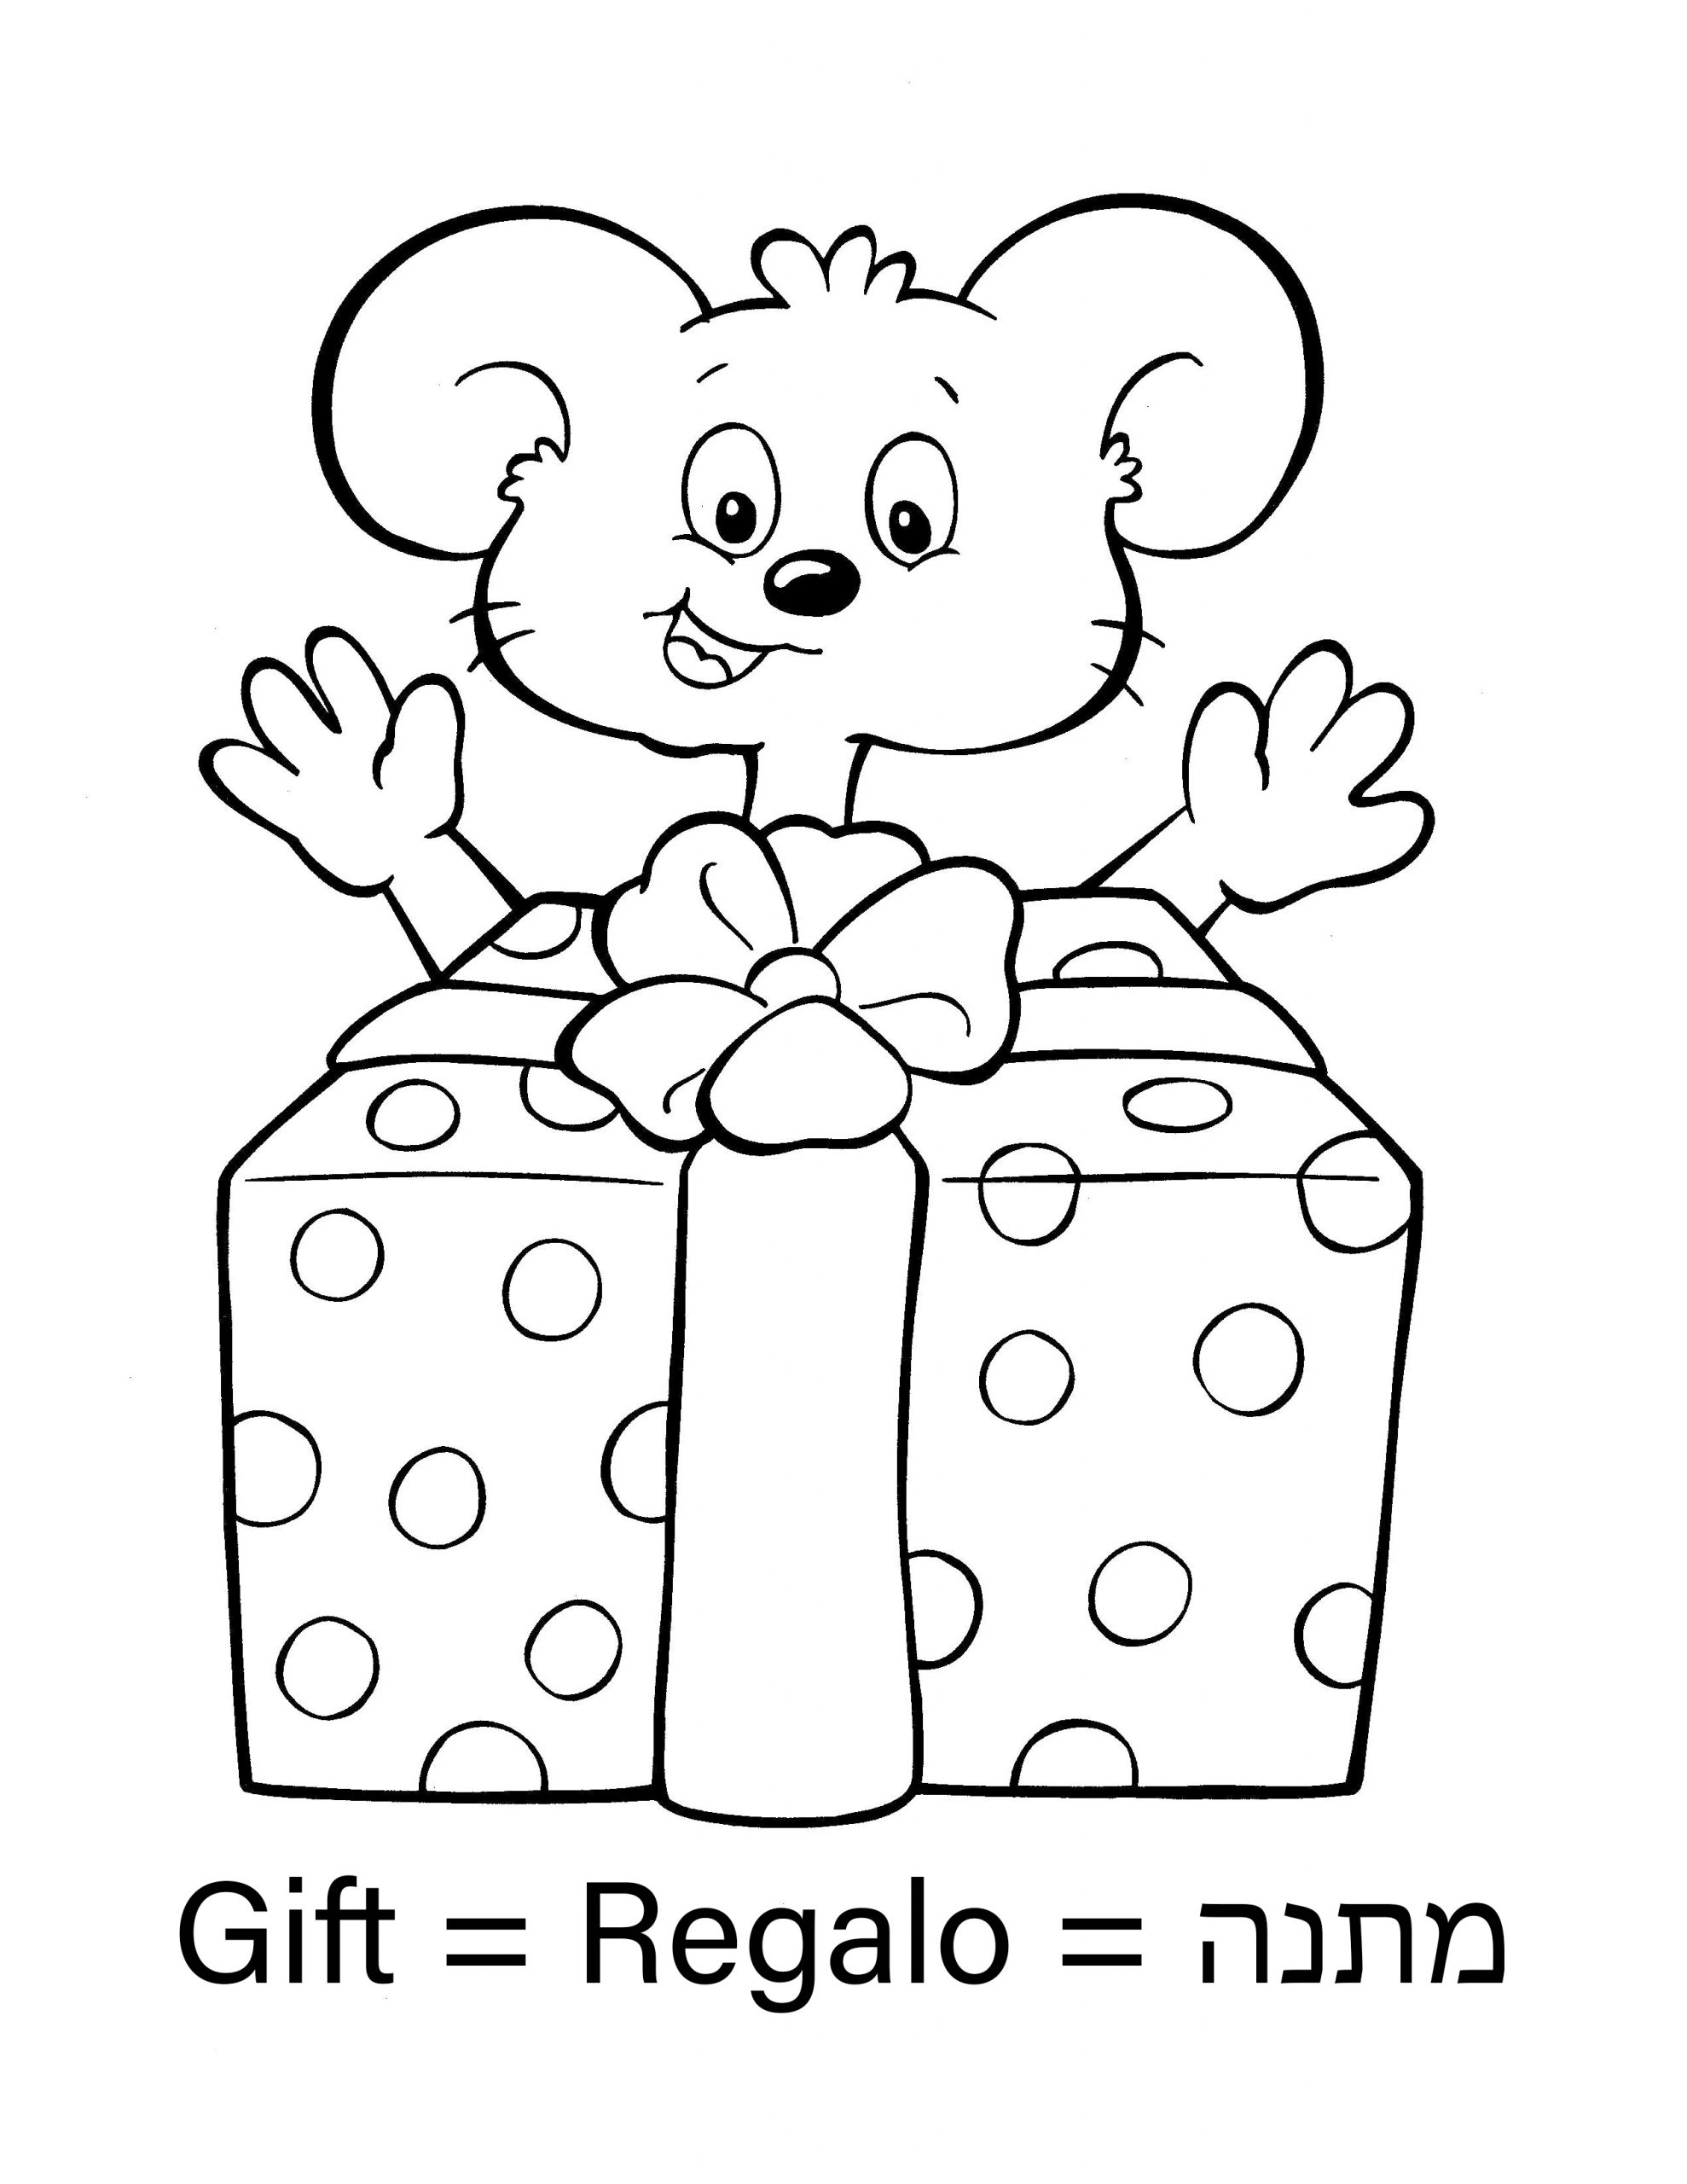 Gift = Regalo = מתנה